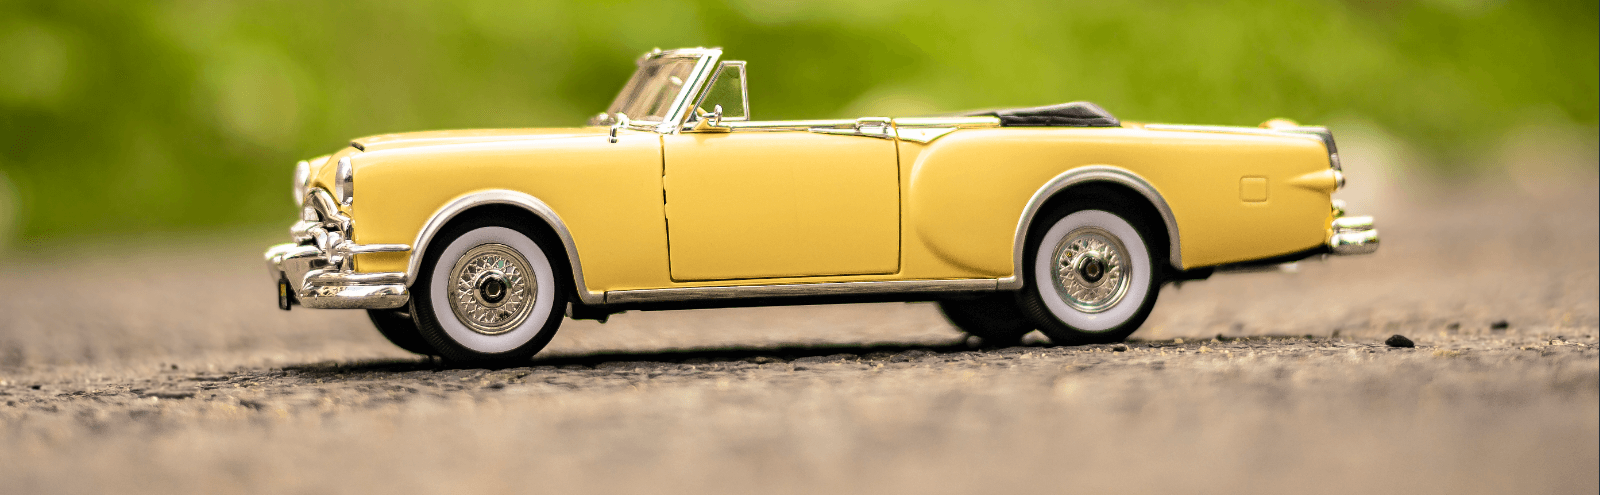 Miniature Model Cars